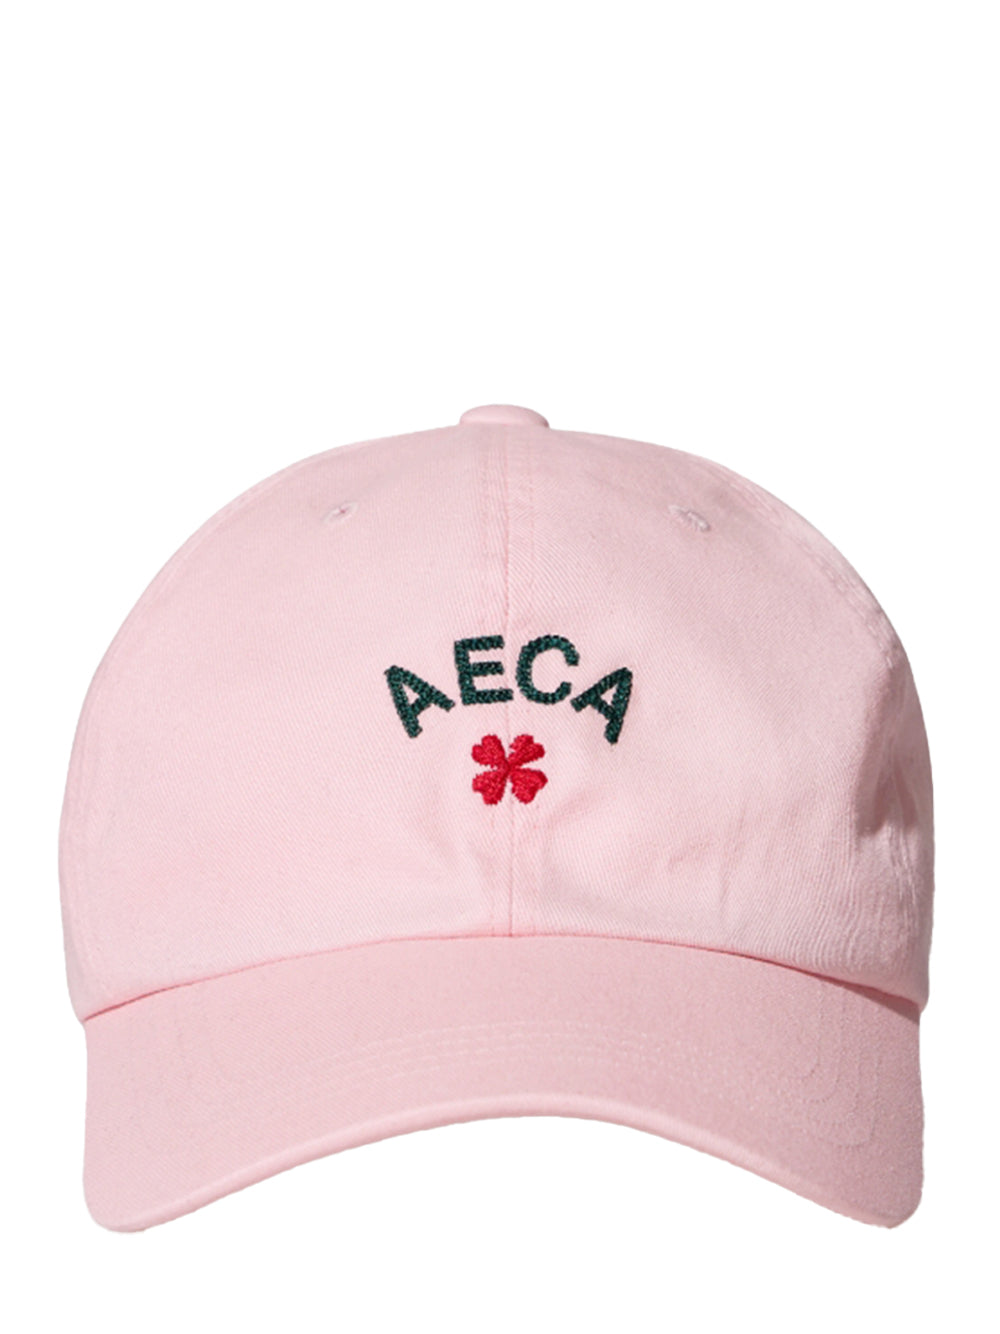 Aeca Clover Logo Cap Pink